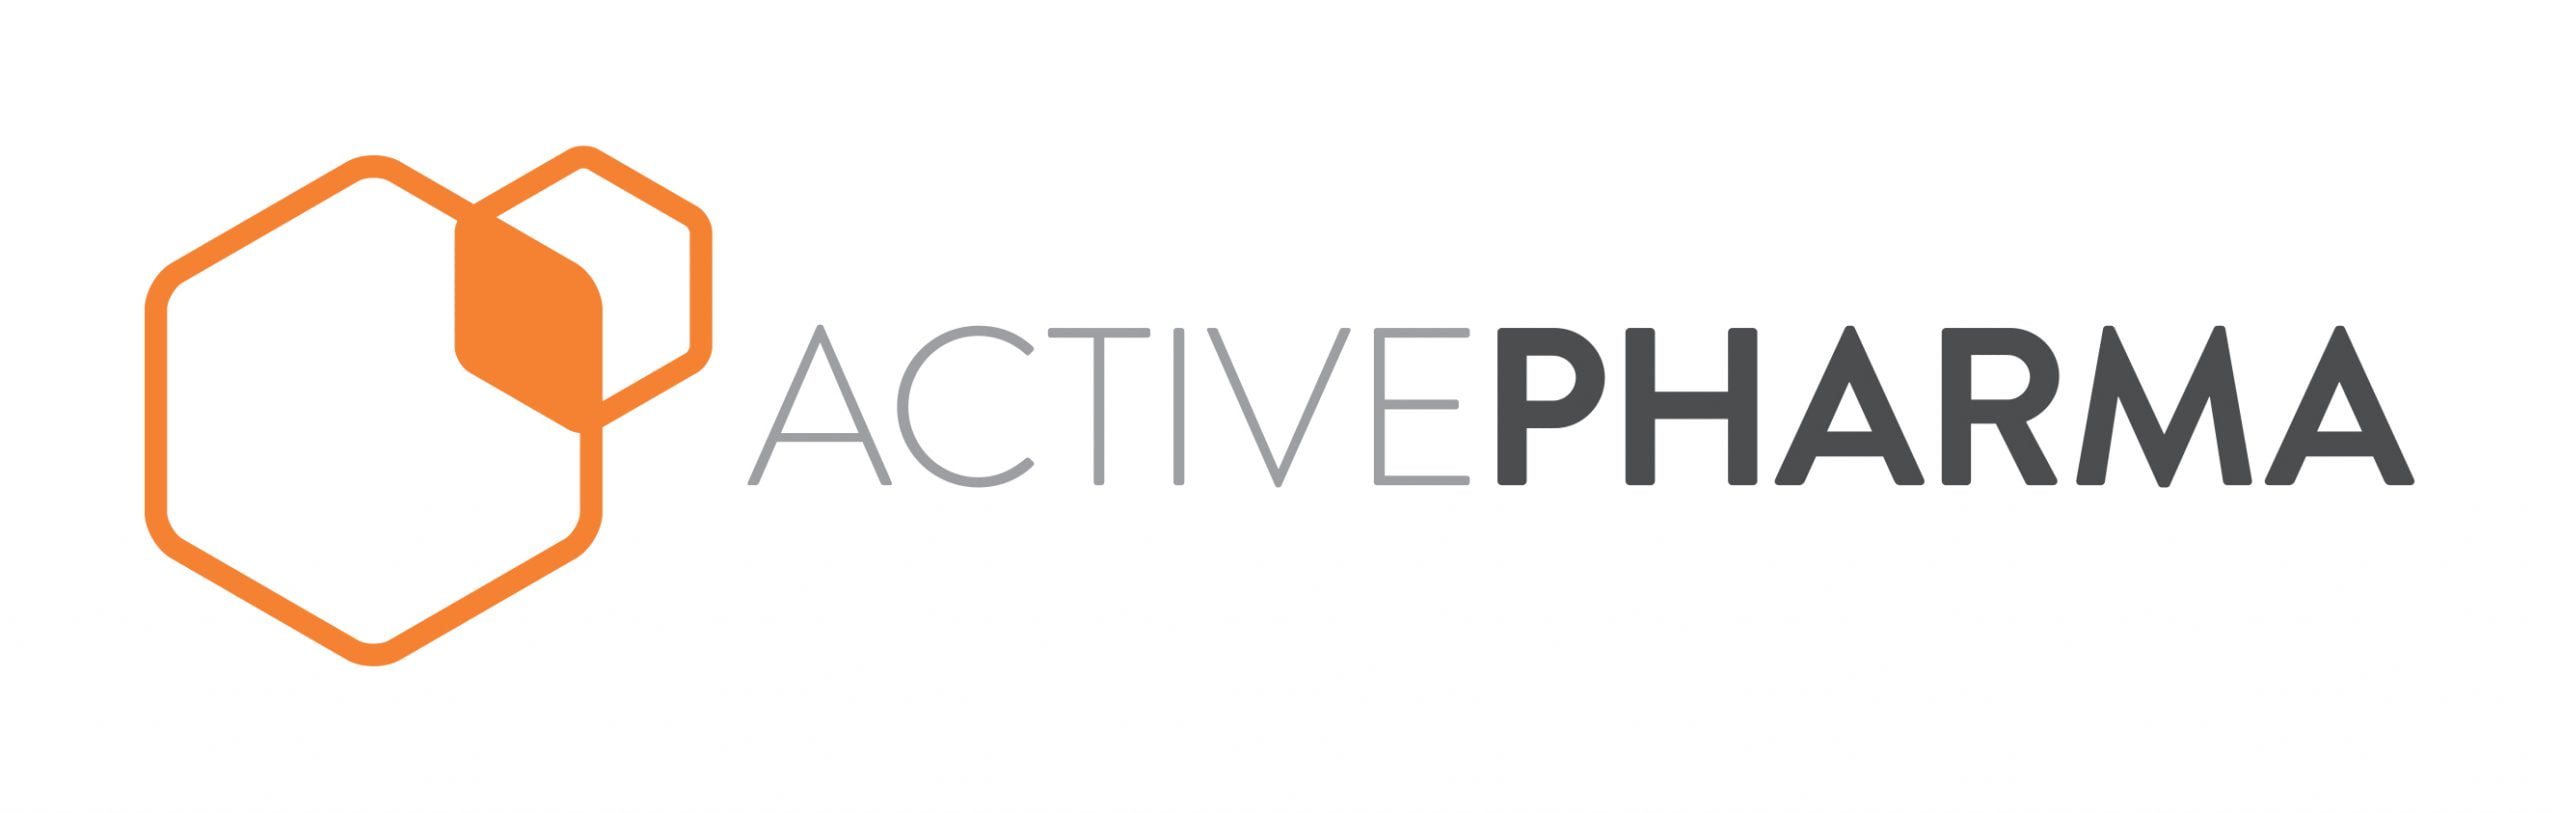 Active Pharma